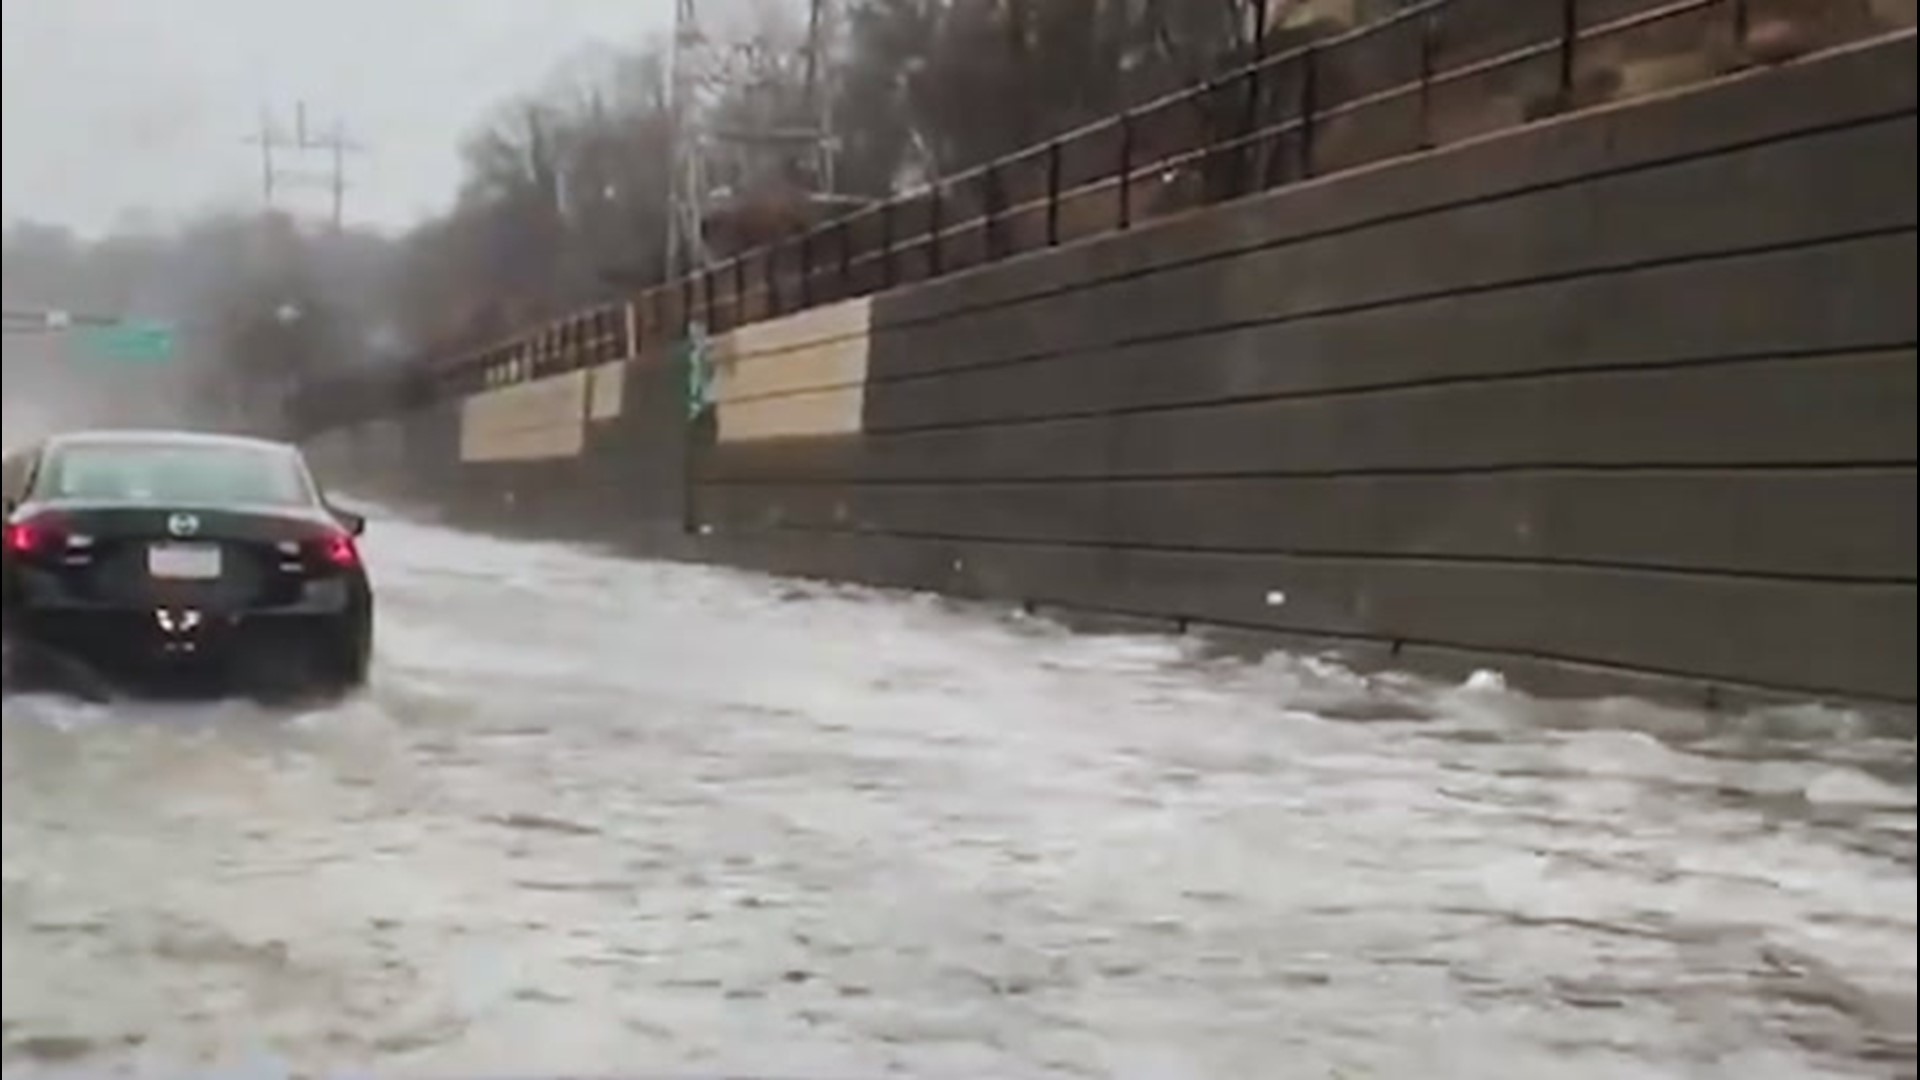 A dangerous flash flood washed over Interstate 76 near Philadelphia, Pennsylvania, on Jan. 25, making driving treacherous.